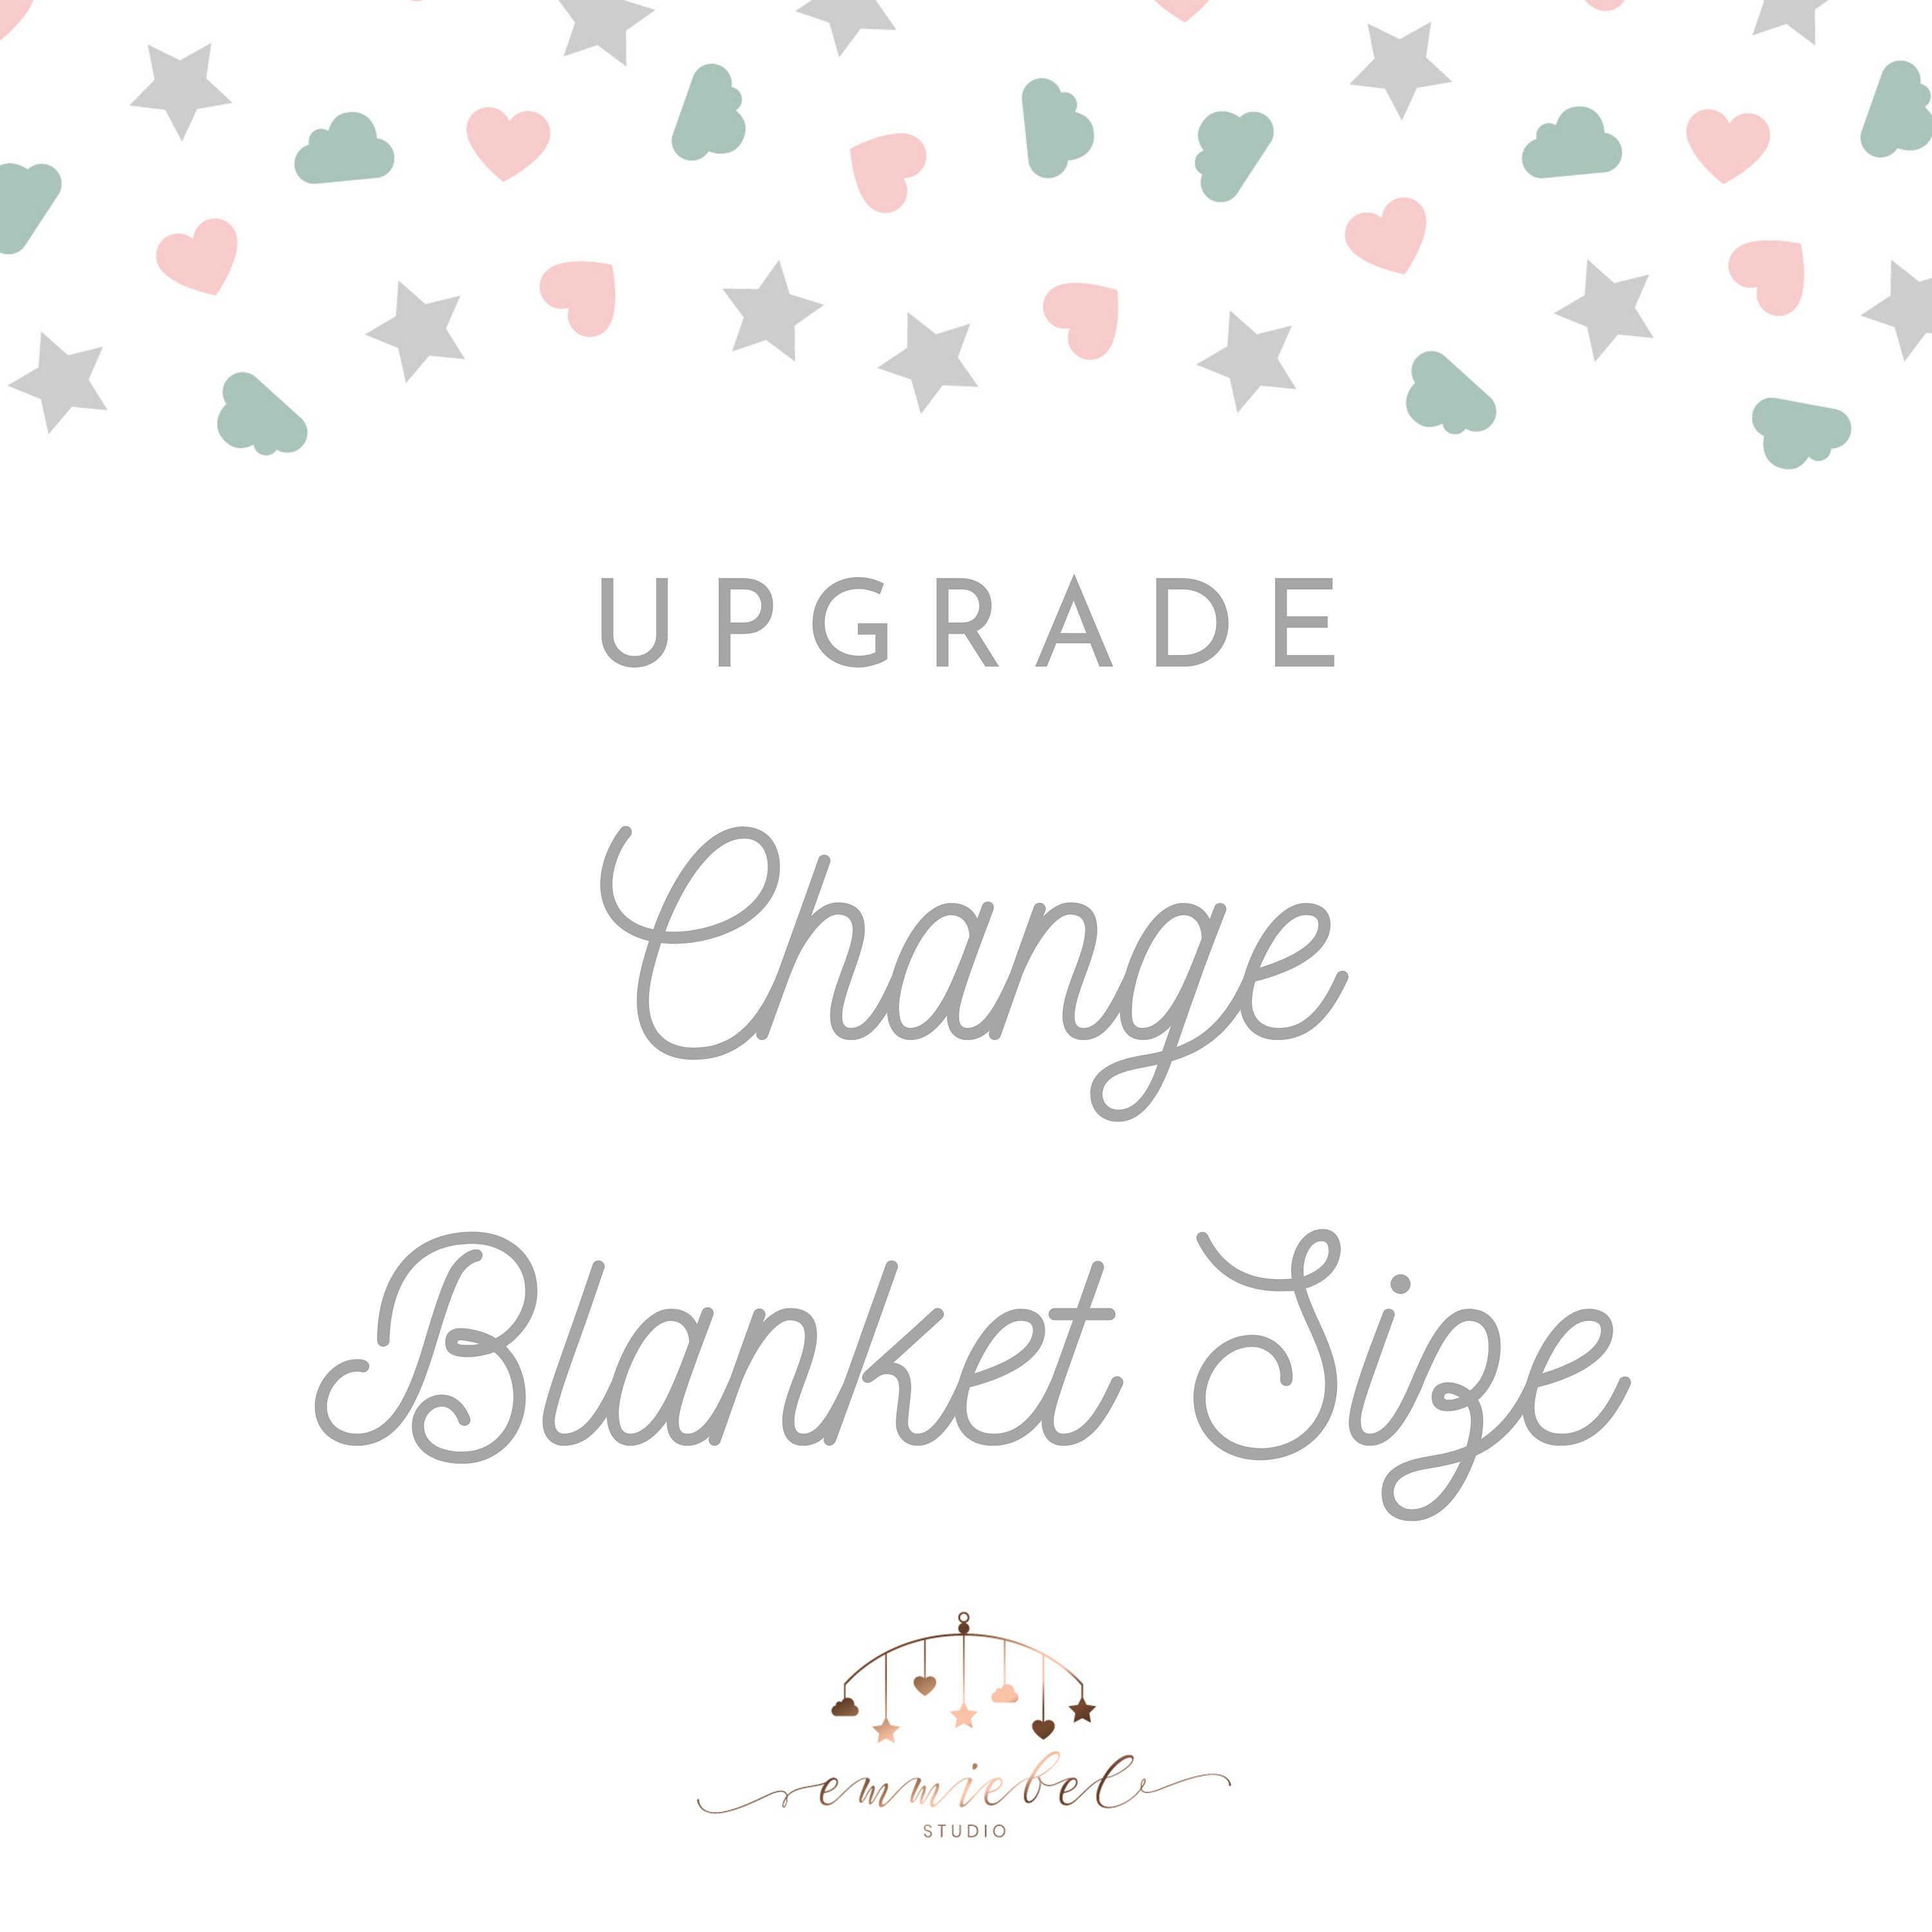 Blanket Size Upgrade